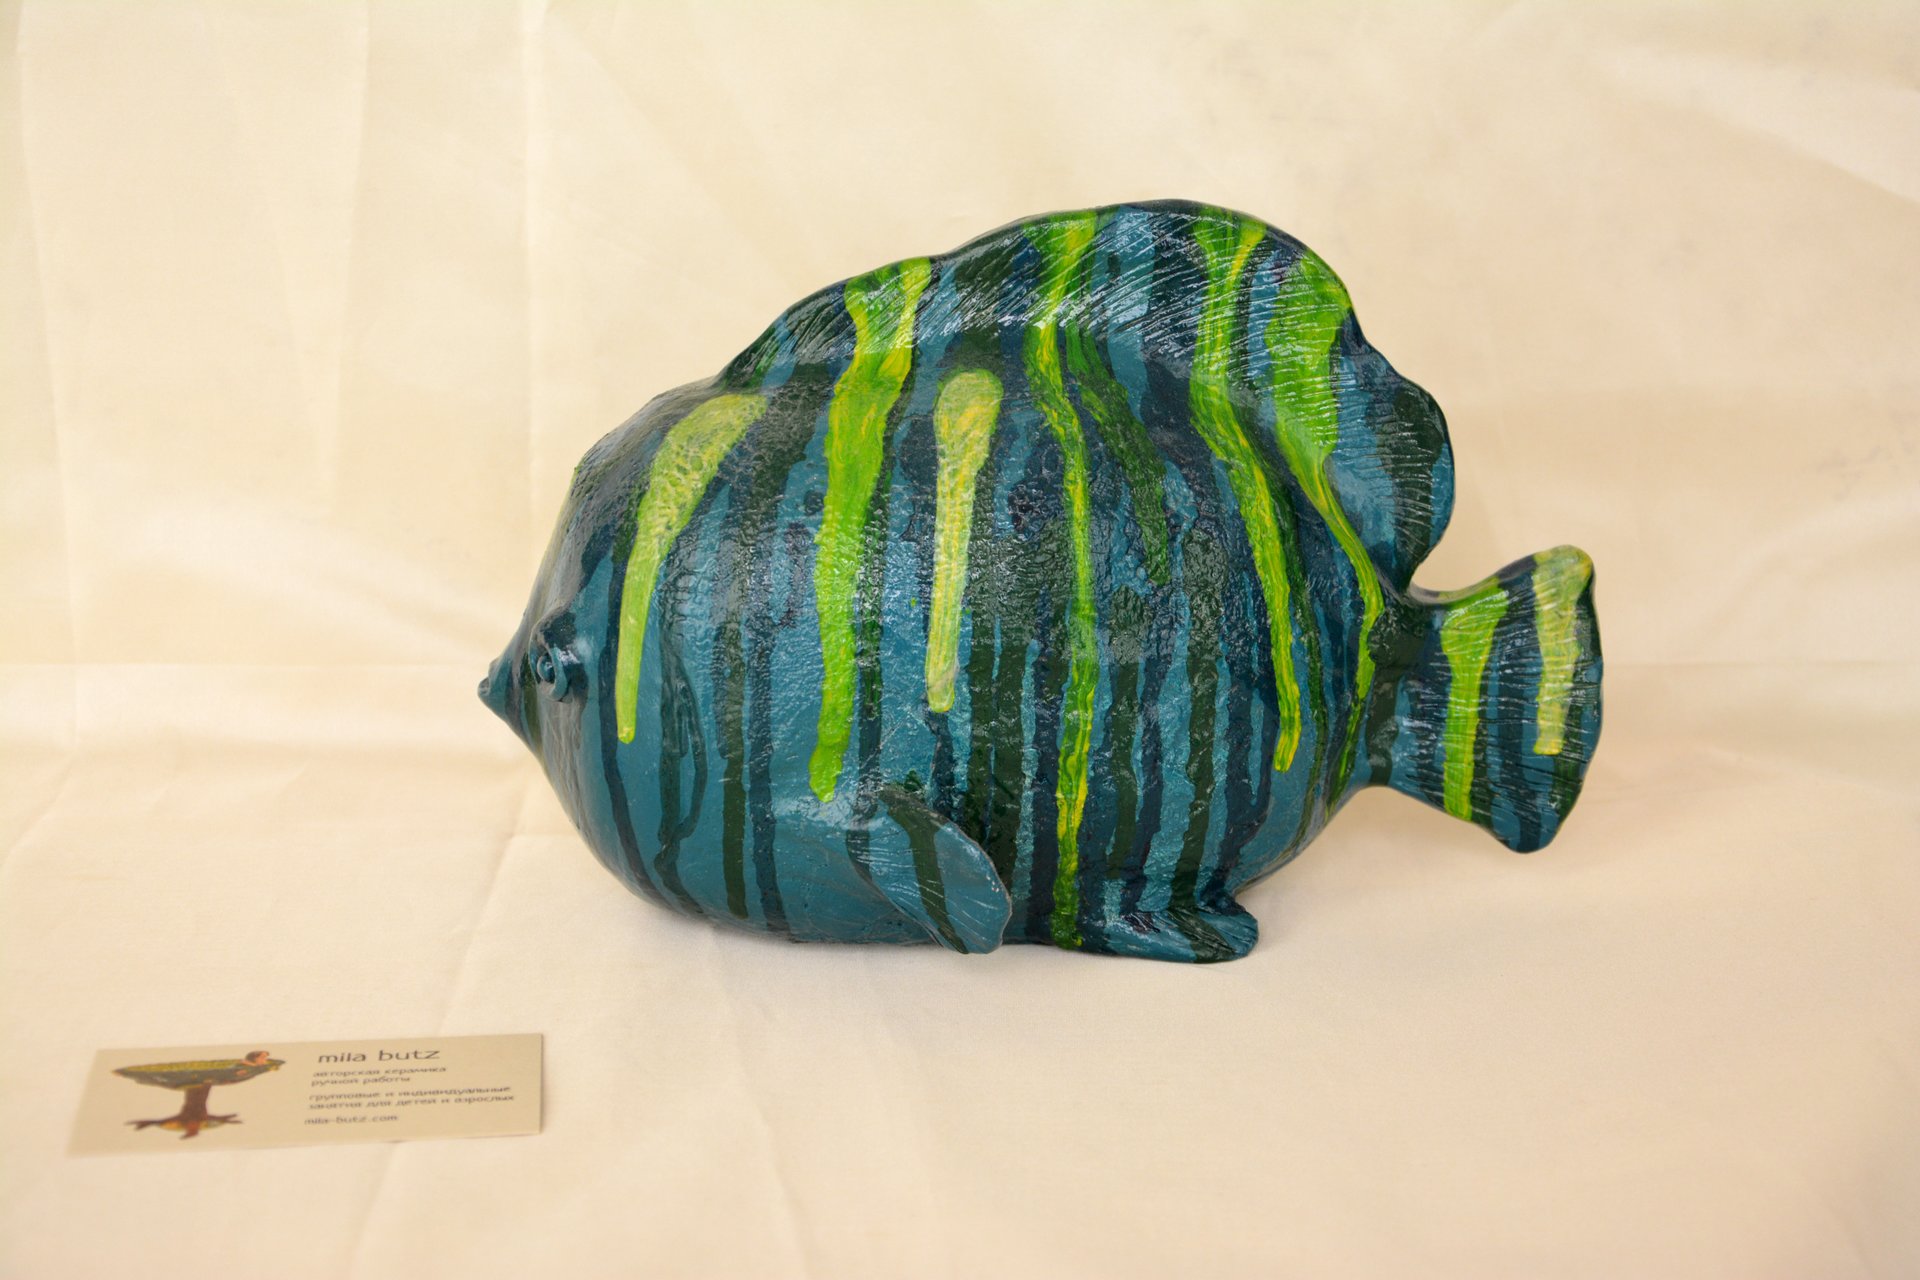 Ceramic figurine of a large fish, height - 17 cm, length - 26 cm, width - 16 cm., photo 2 of 2.